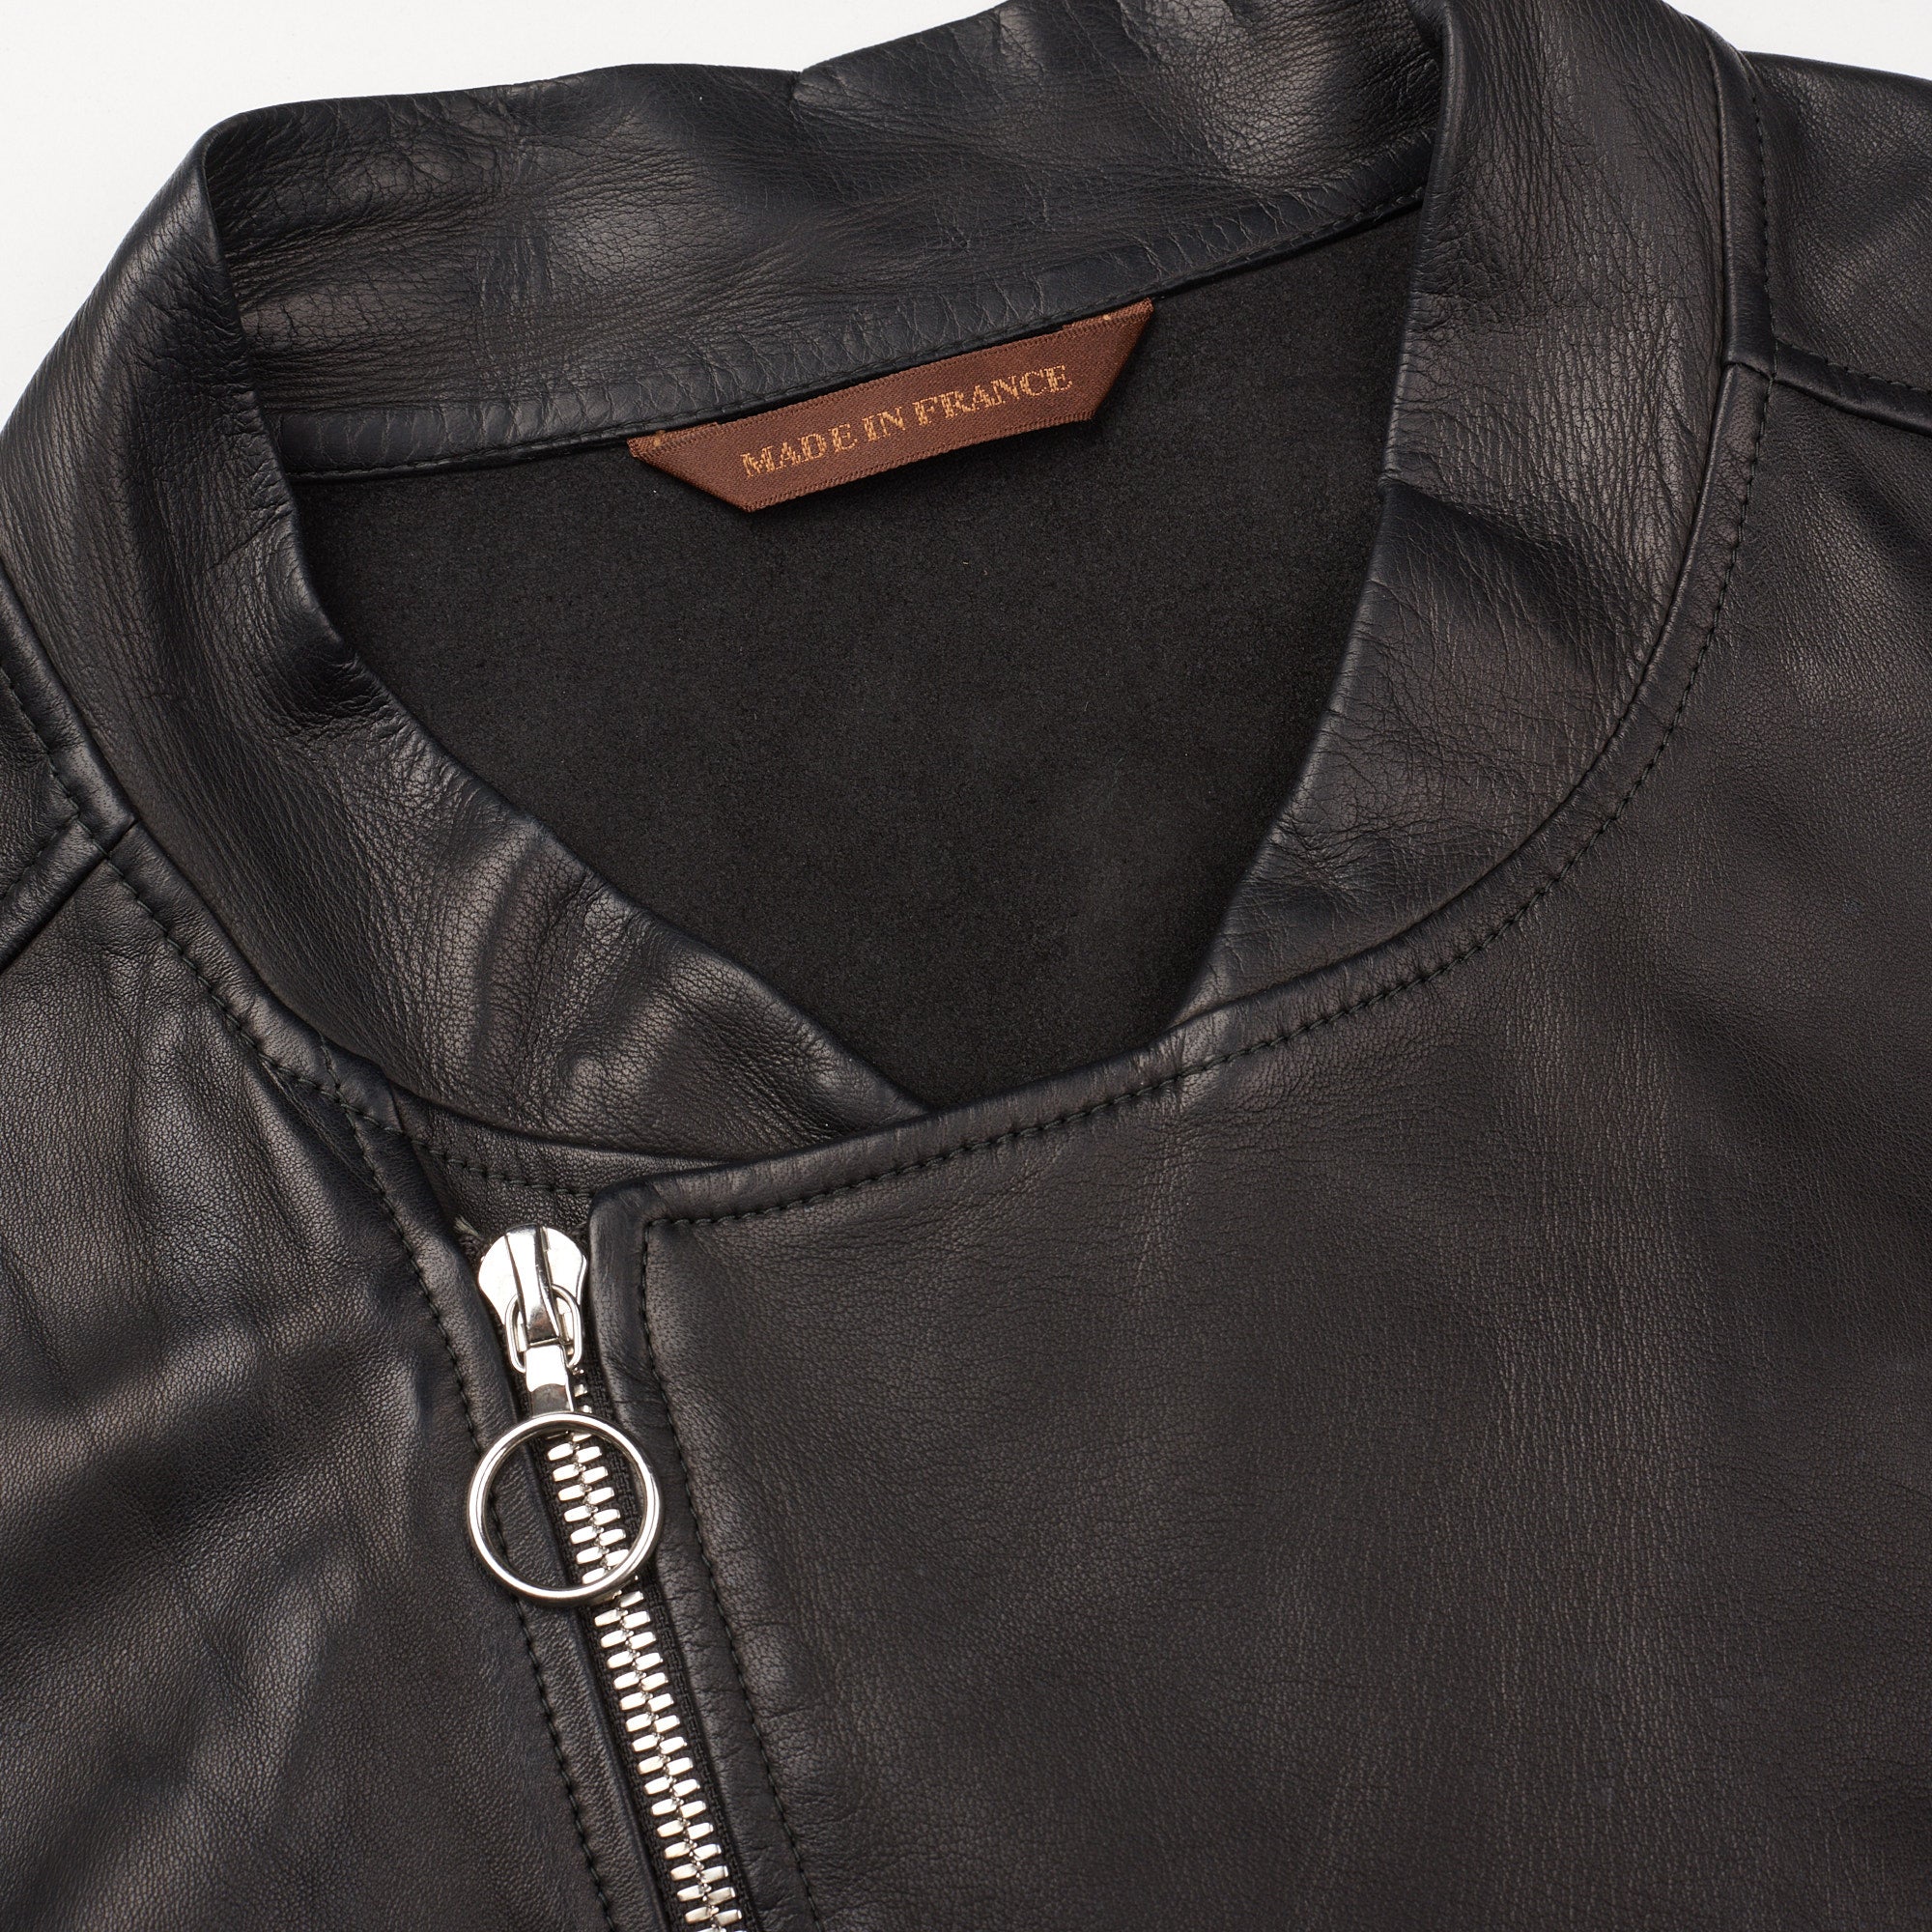 SERAPHIN Black Lamb Leather Unlined Asymmetrical Biker Motorcycle Jacket FR 50 US M SERAPHIN